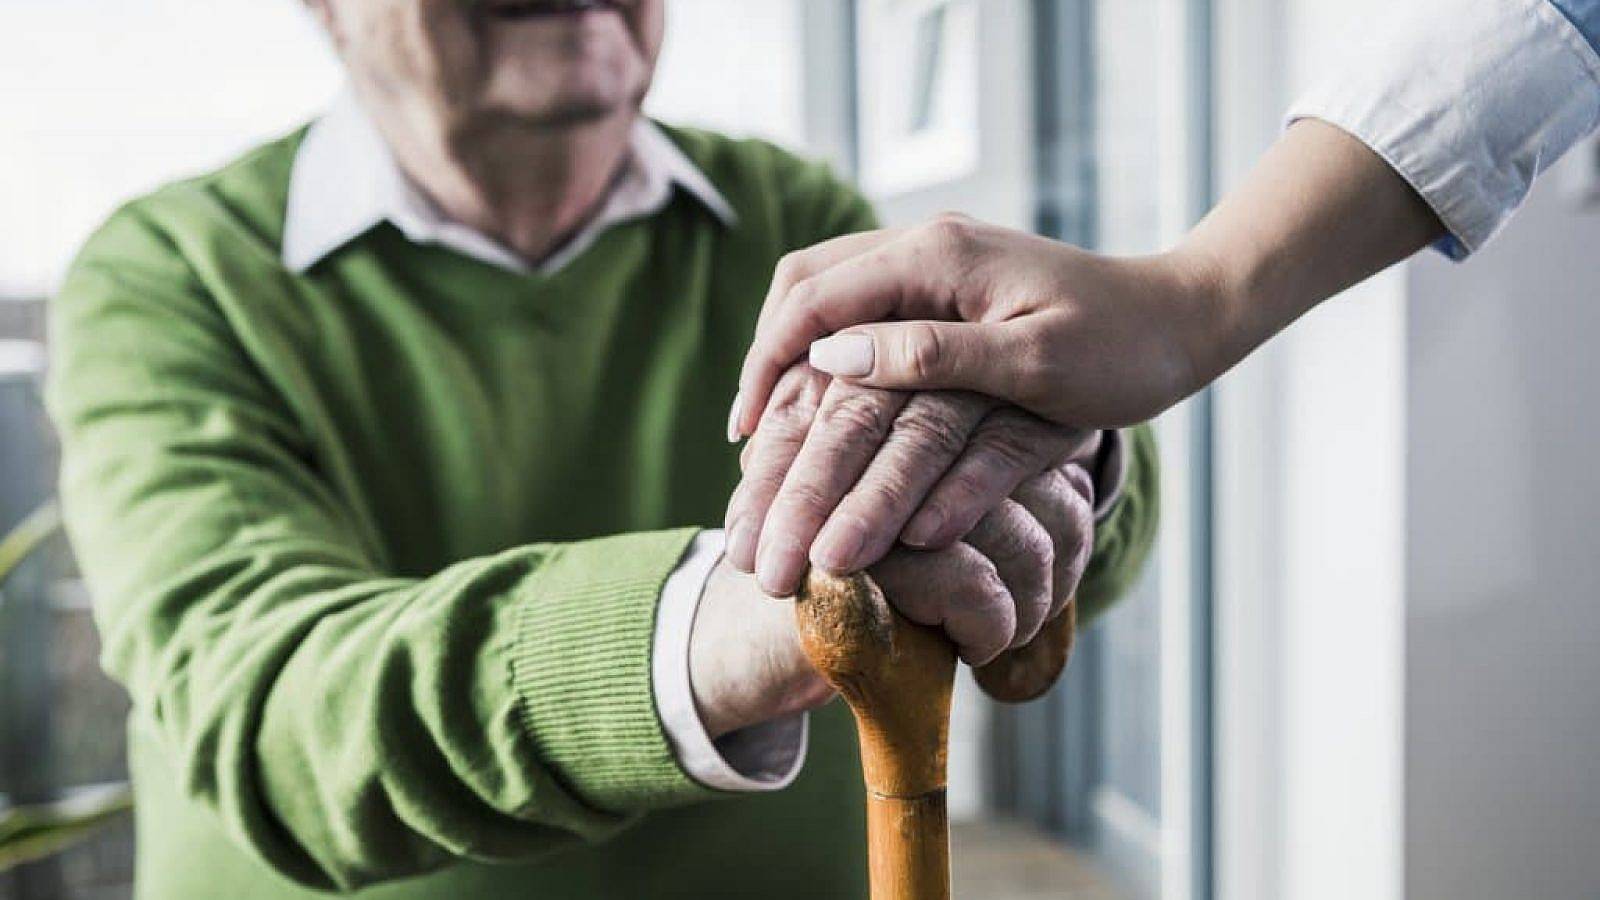 nursing home care south dakota complaints neglect abuse